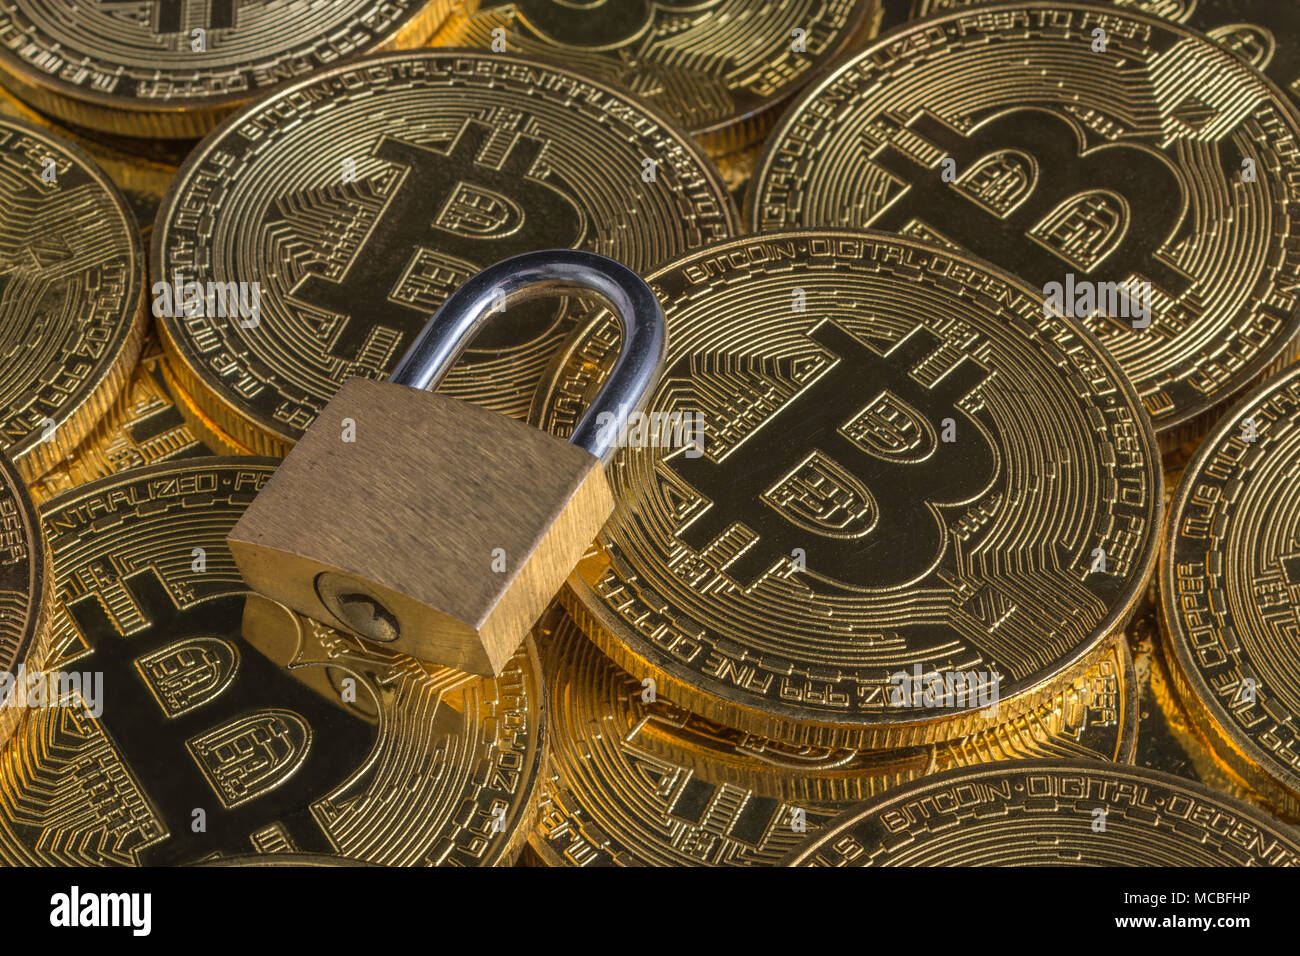 Macro-photo of small padlock with gold Bitcoins - as visual metaphor for Blochain / Bitcoin blockchain. China Bitcoin conference metaphor. Stock Photo